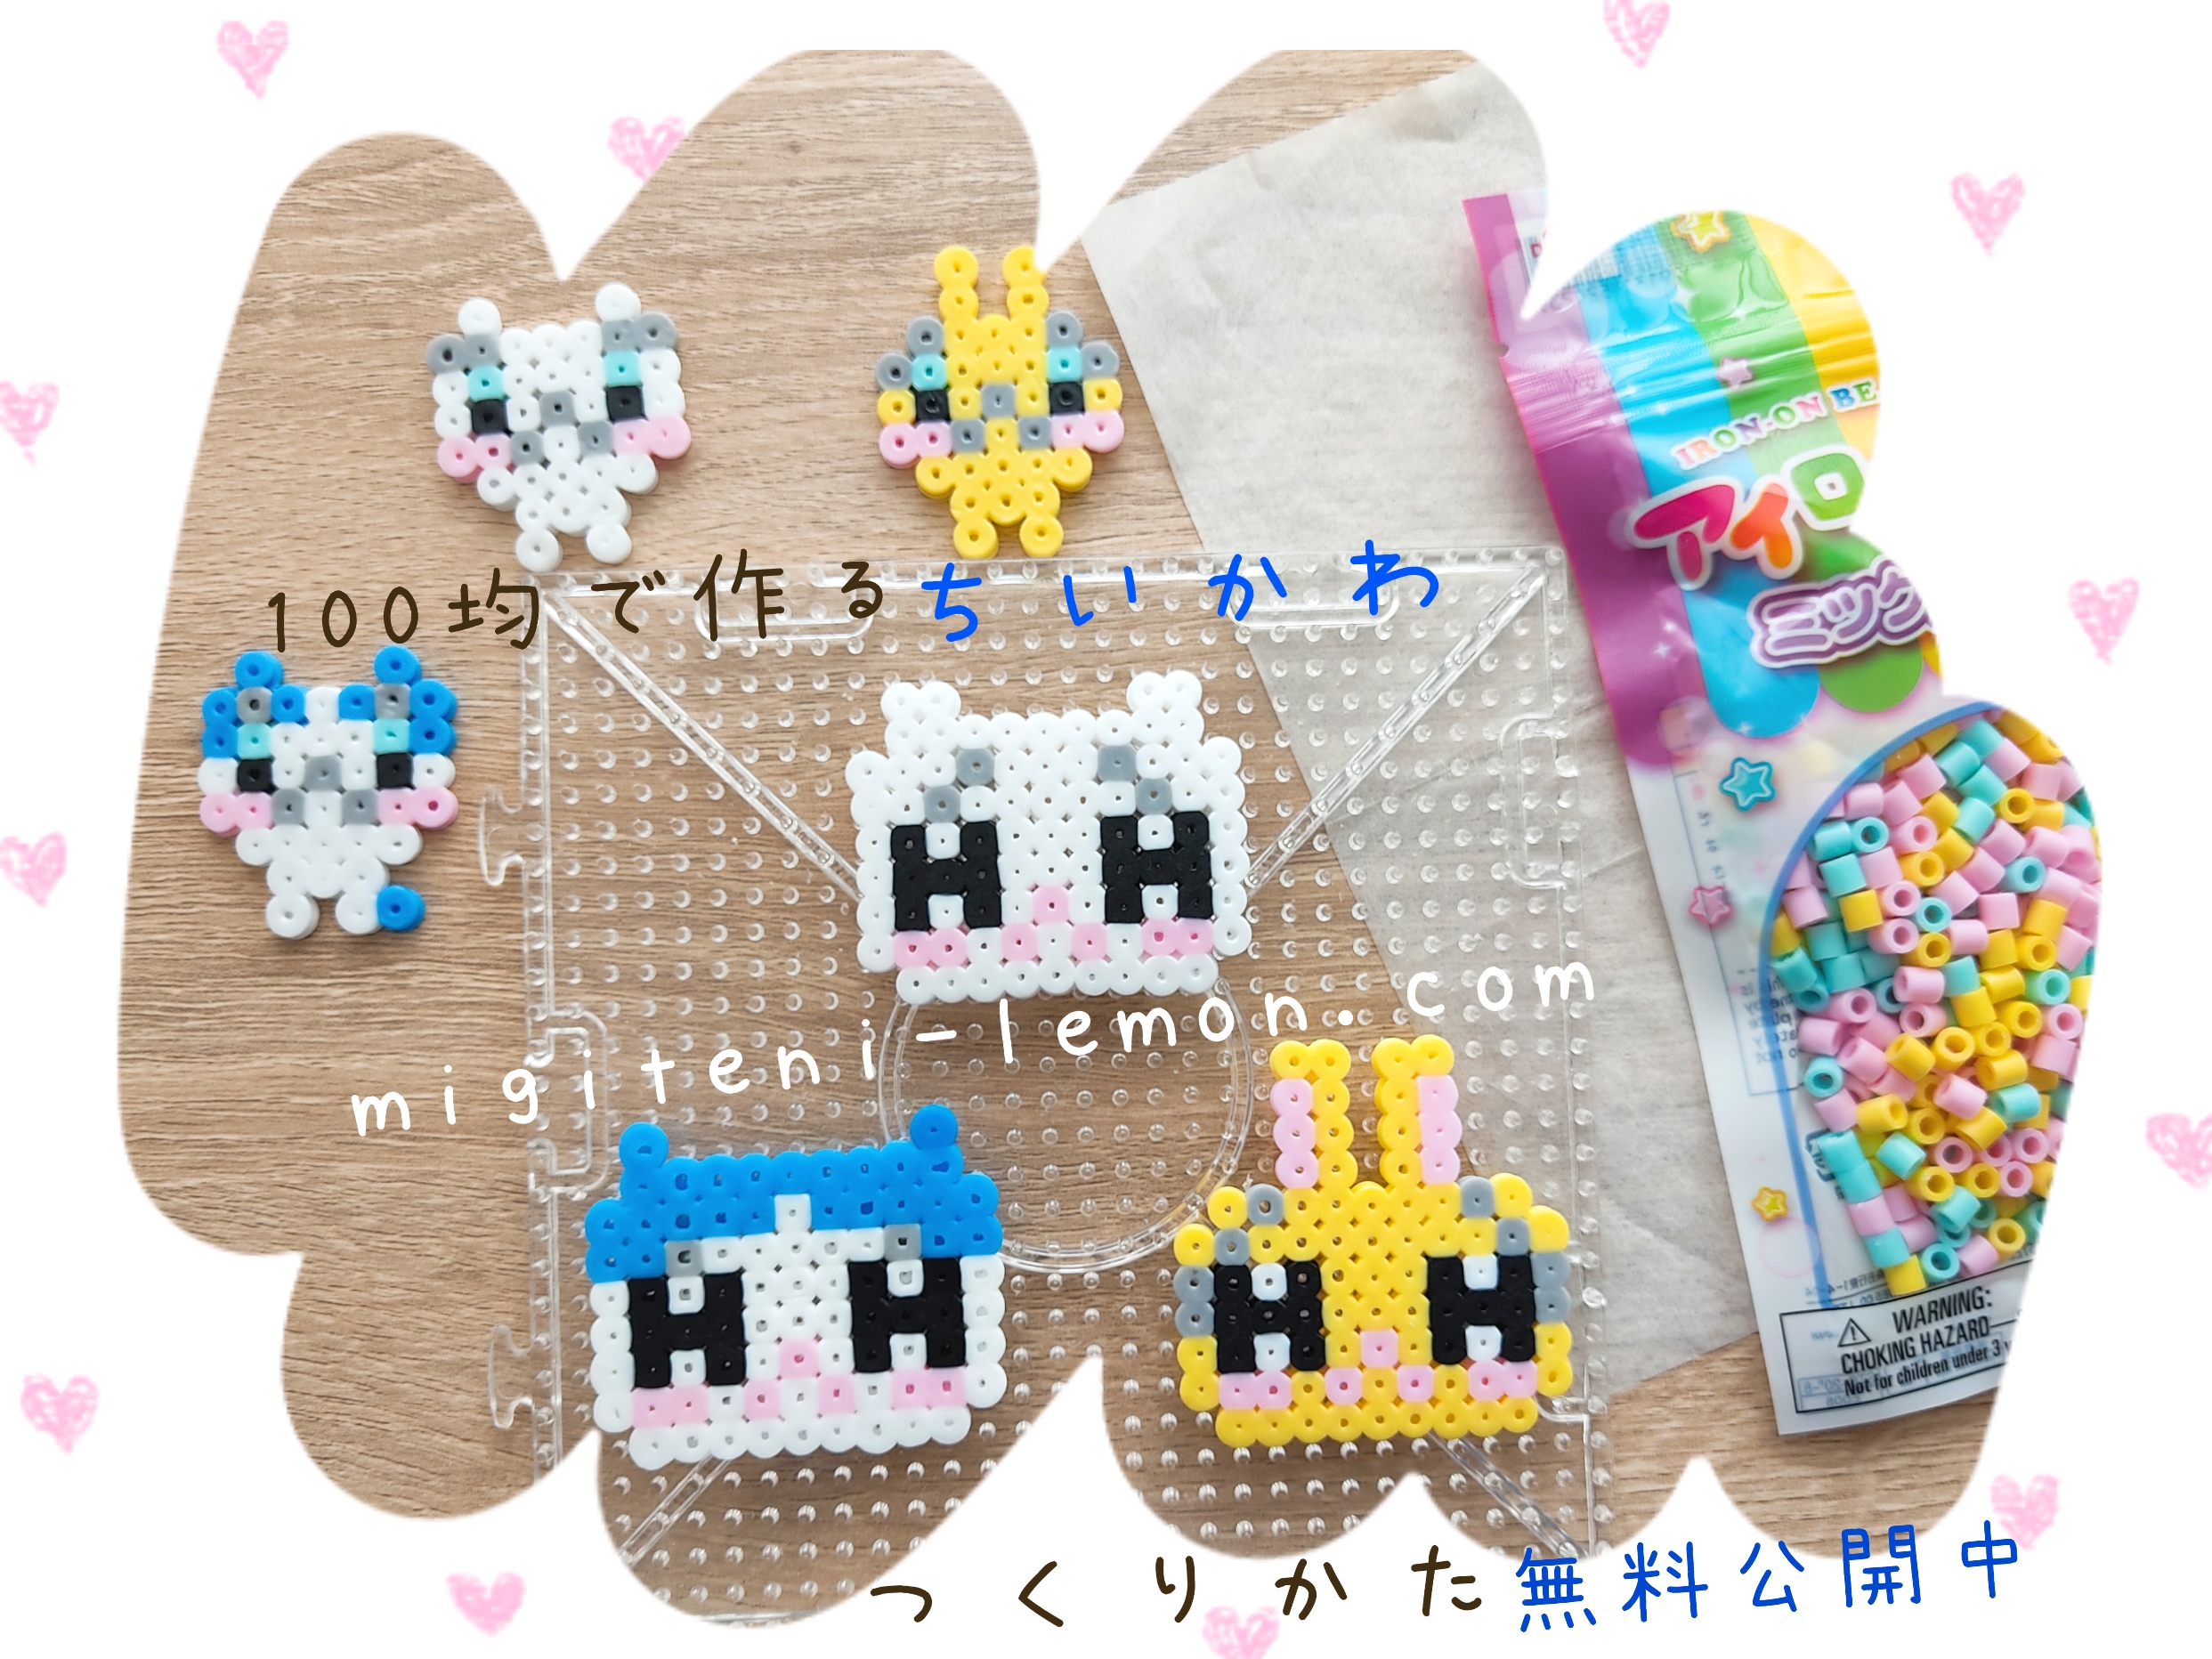 chiikawa-hachiware-usagi-kawaii-handmade-iron-beads-100kin-free-zuan-daiso-small-square-kids-nagano